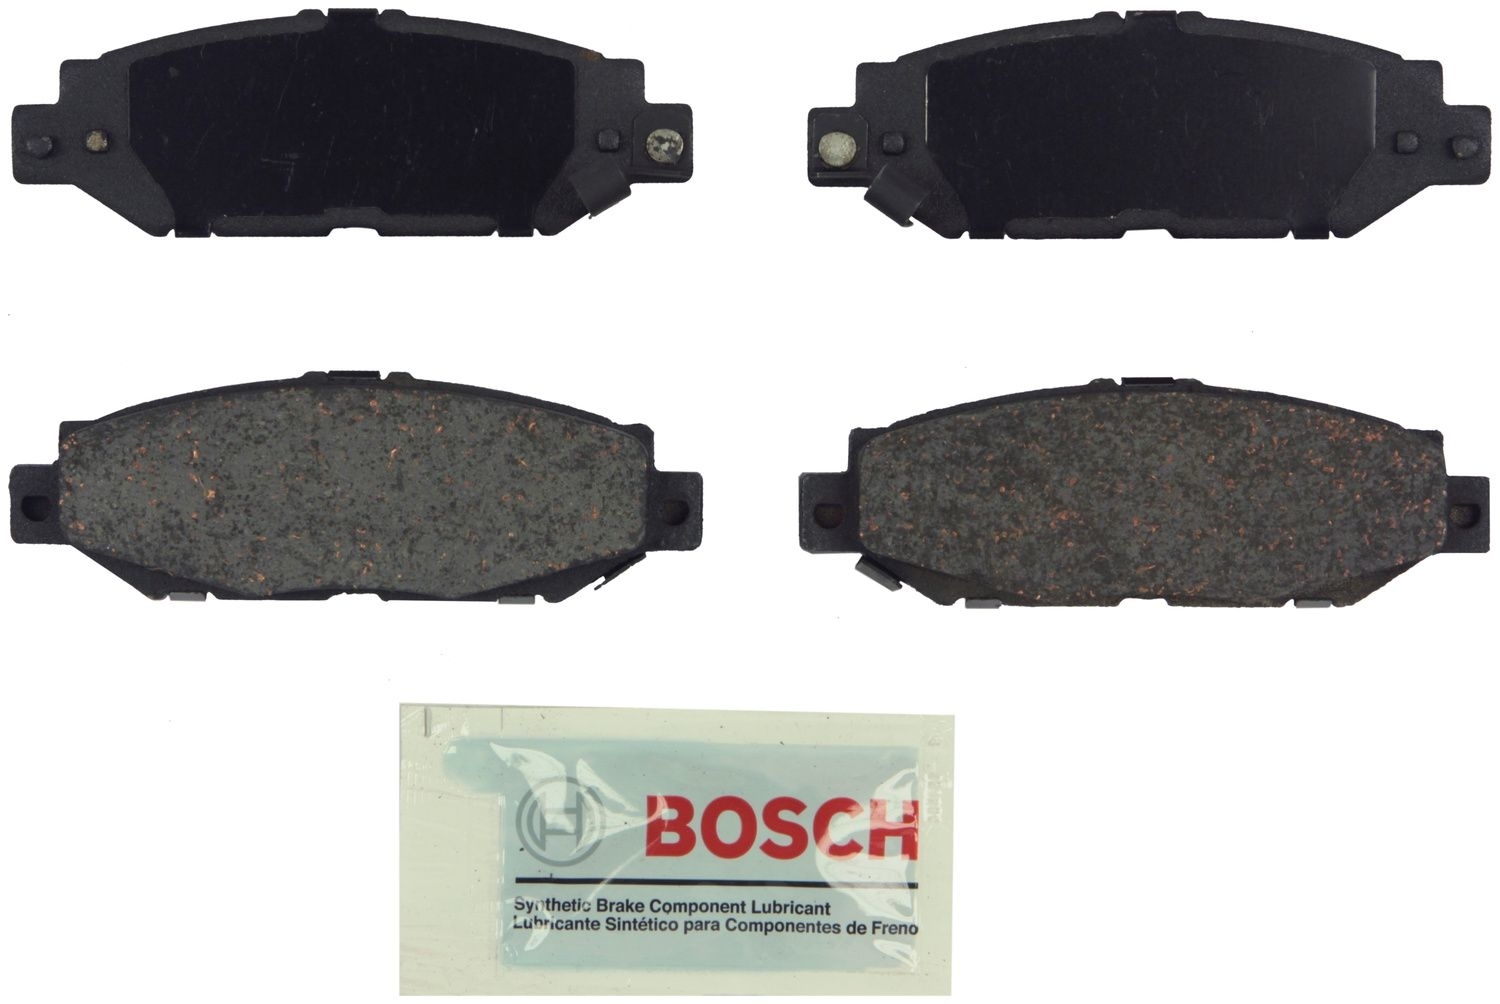 BOSCH BRAKE - Bosch Blue Ceramic Brake Pads (Rear) - BQC BE572